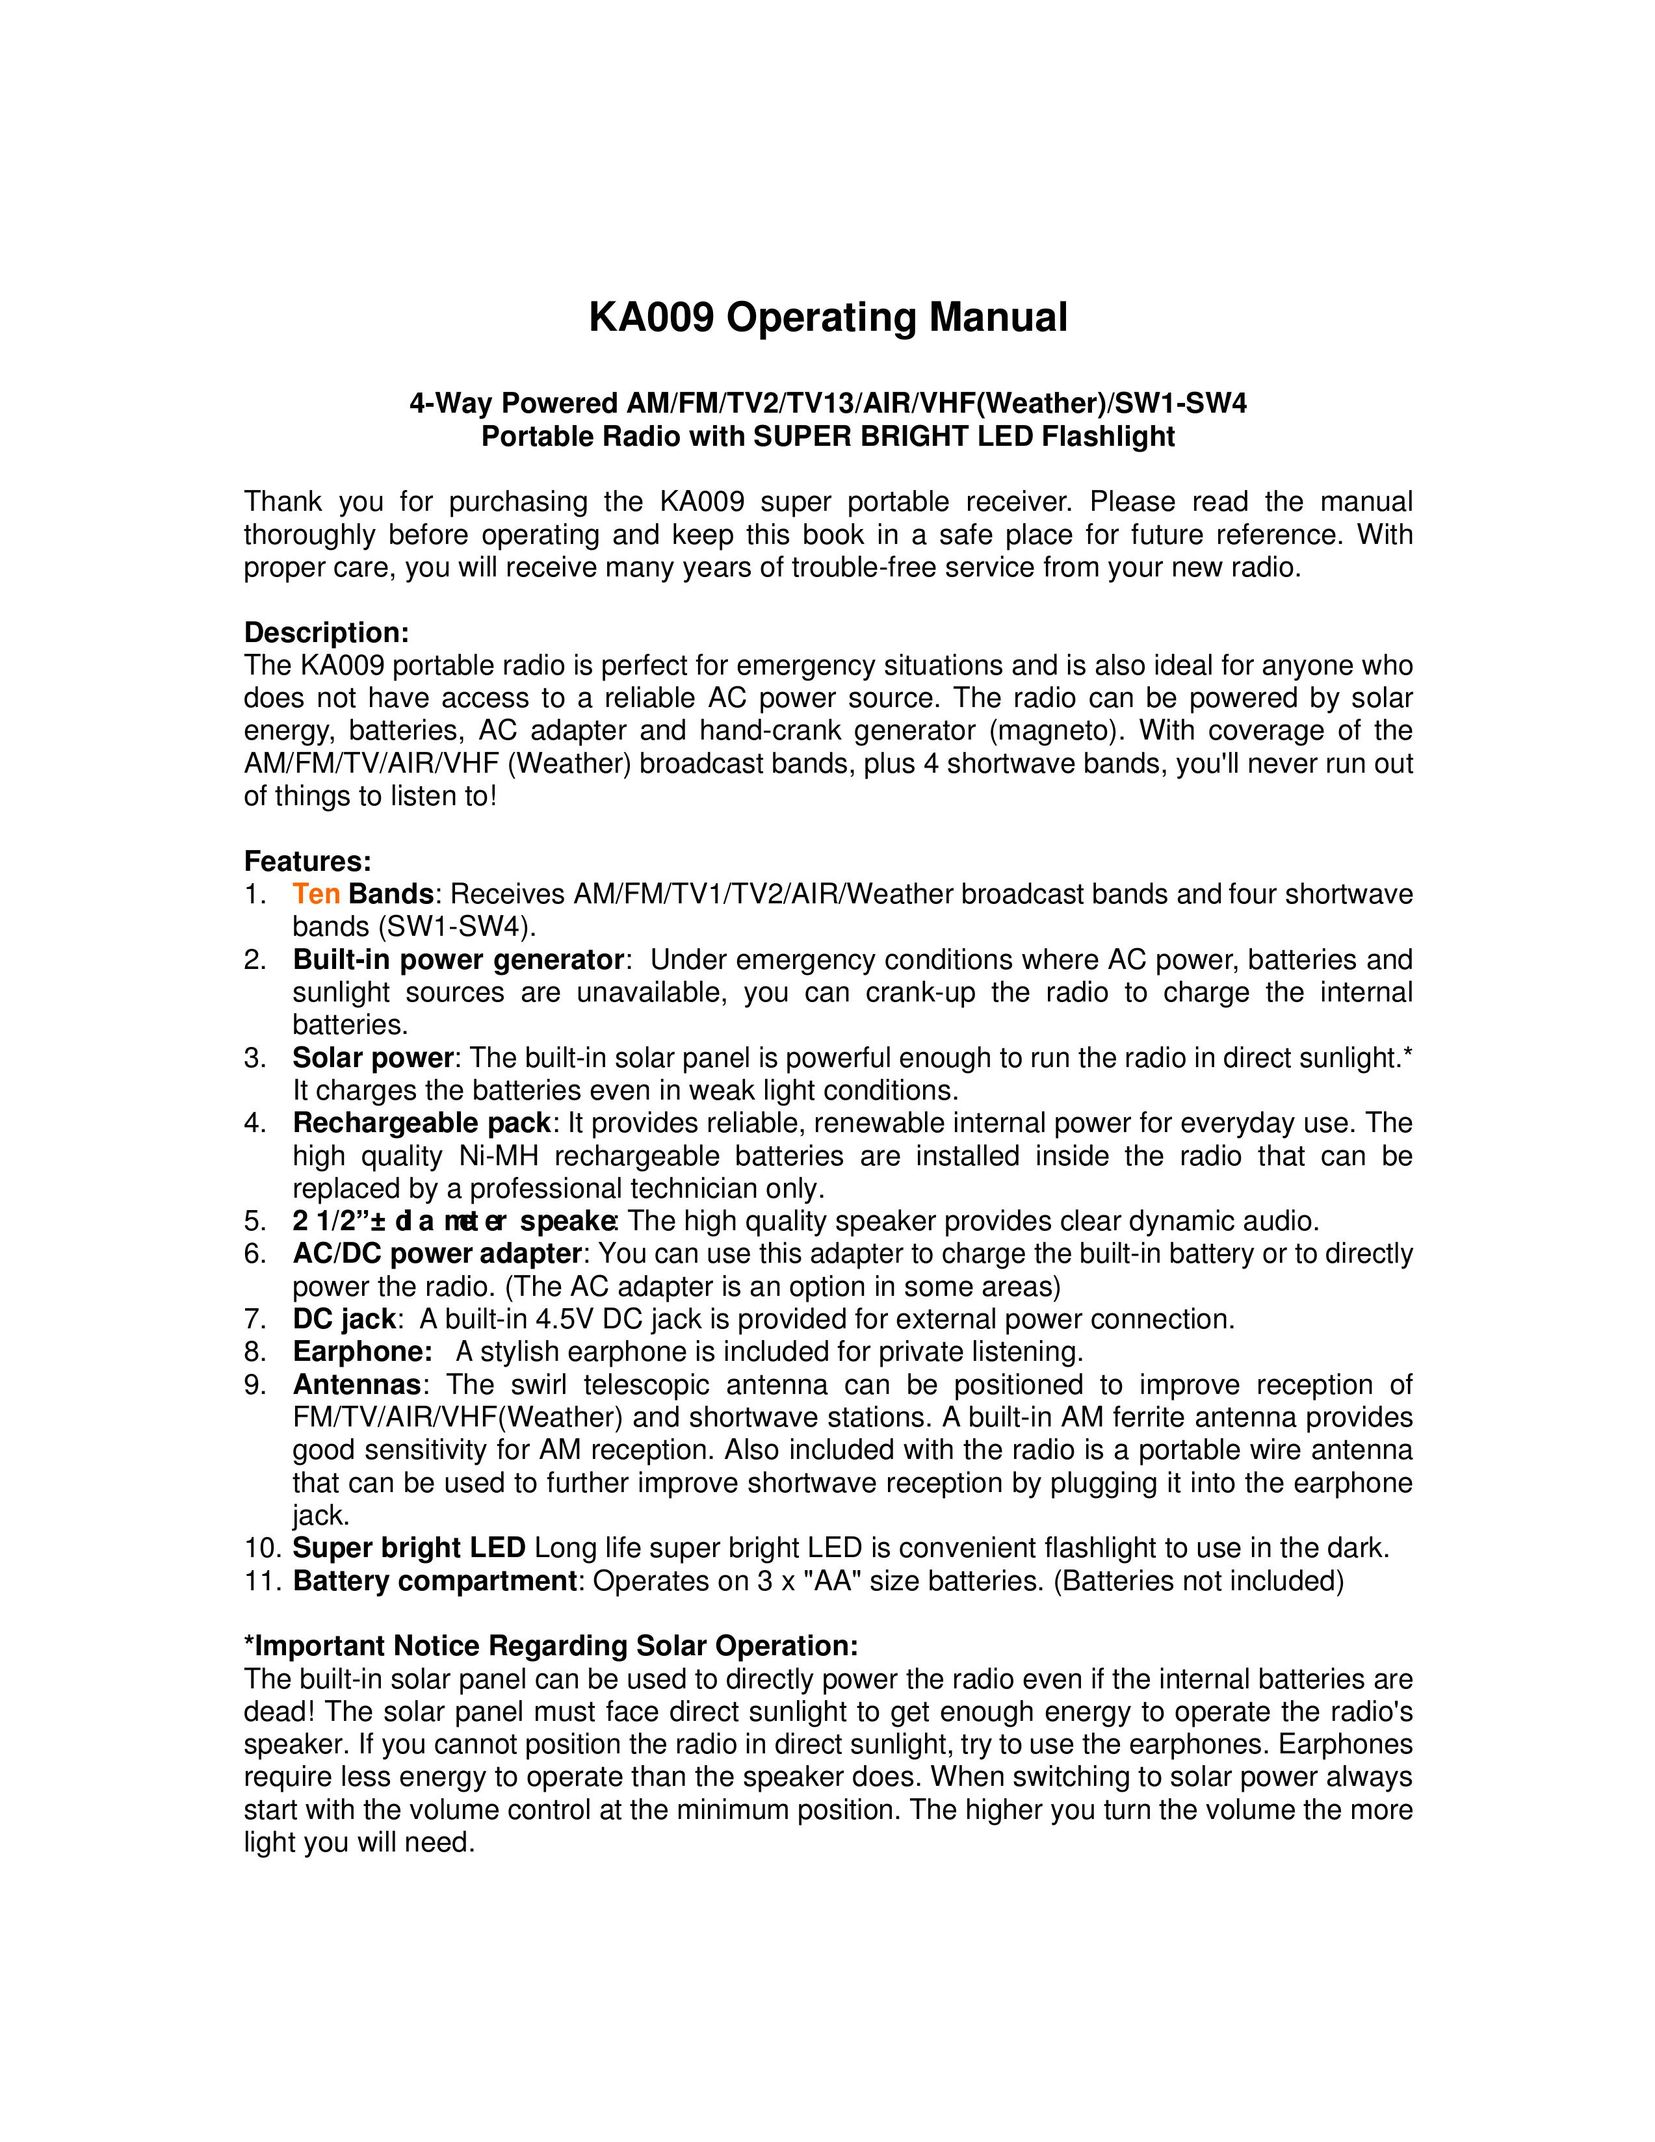 Kaito electronic KA009 Portable Radio User Manual